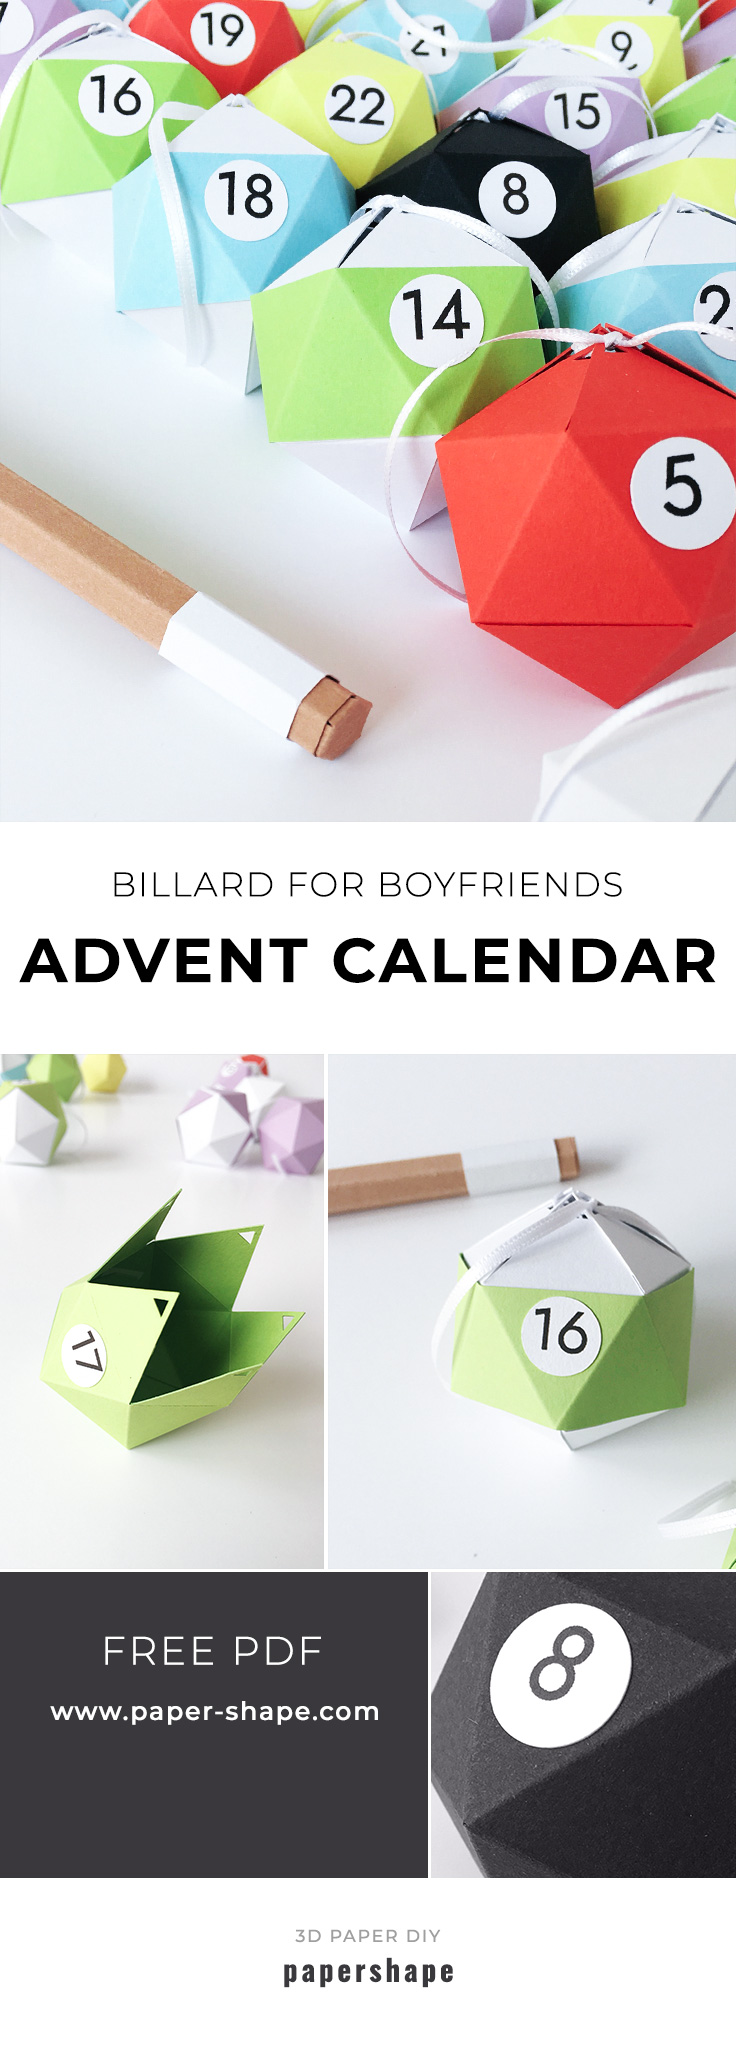 diy billard advent calendar for your boyfriend - free template from #papershape